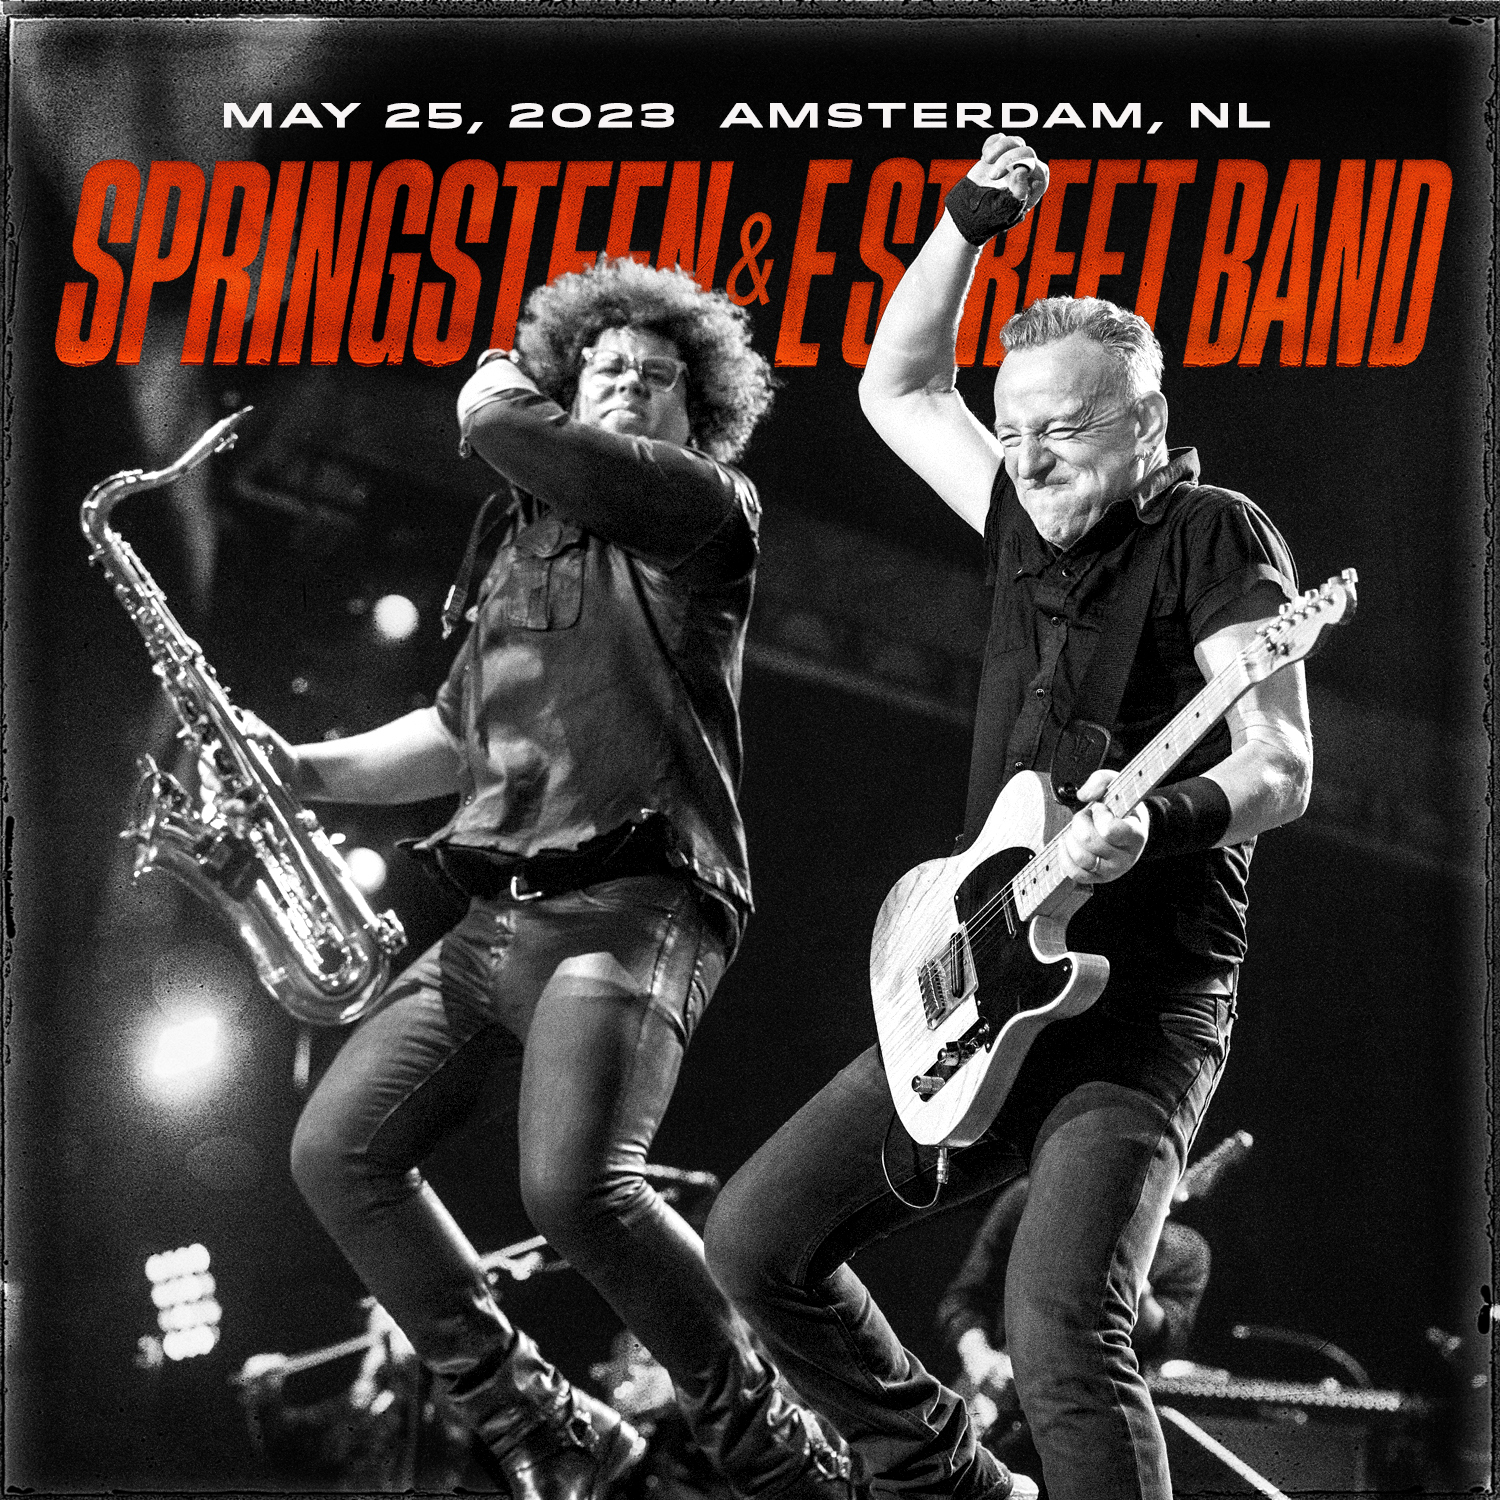 Bruce Springsteen & The E Street Band – 2023 - Johan Cruyff Arena, Amsterdam, NL, May 25